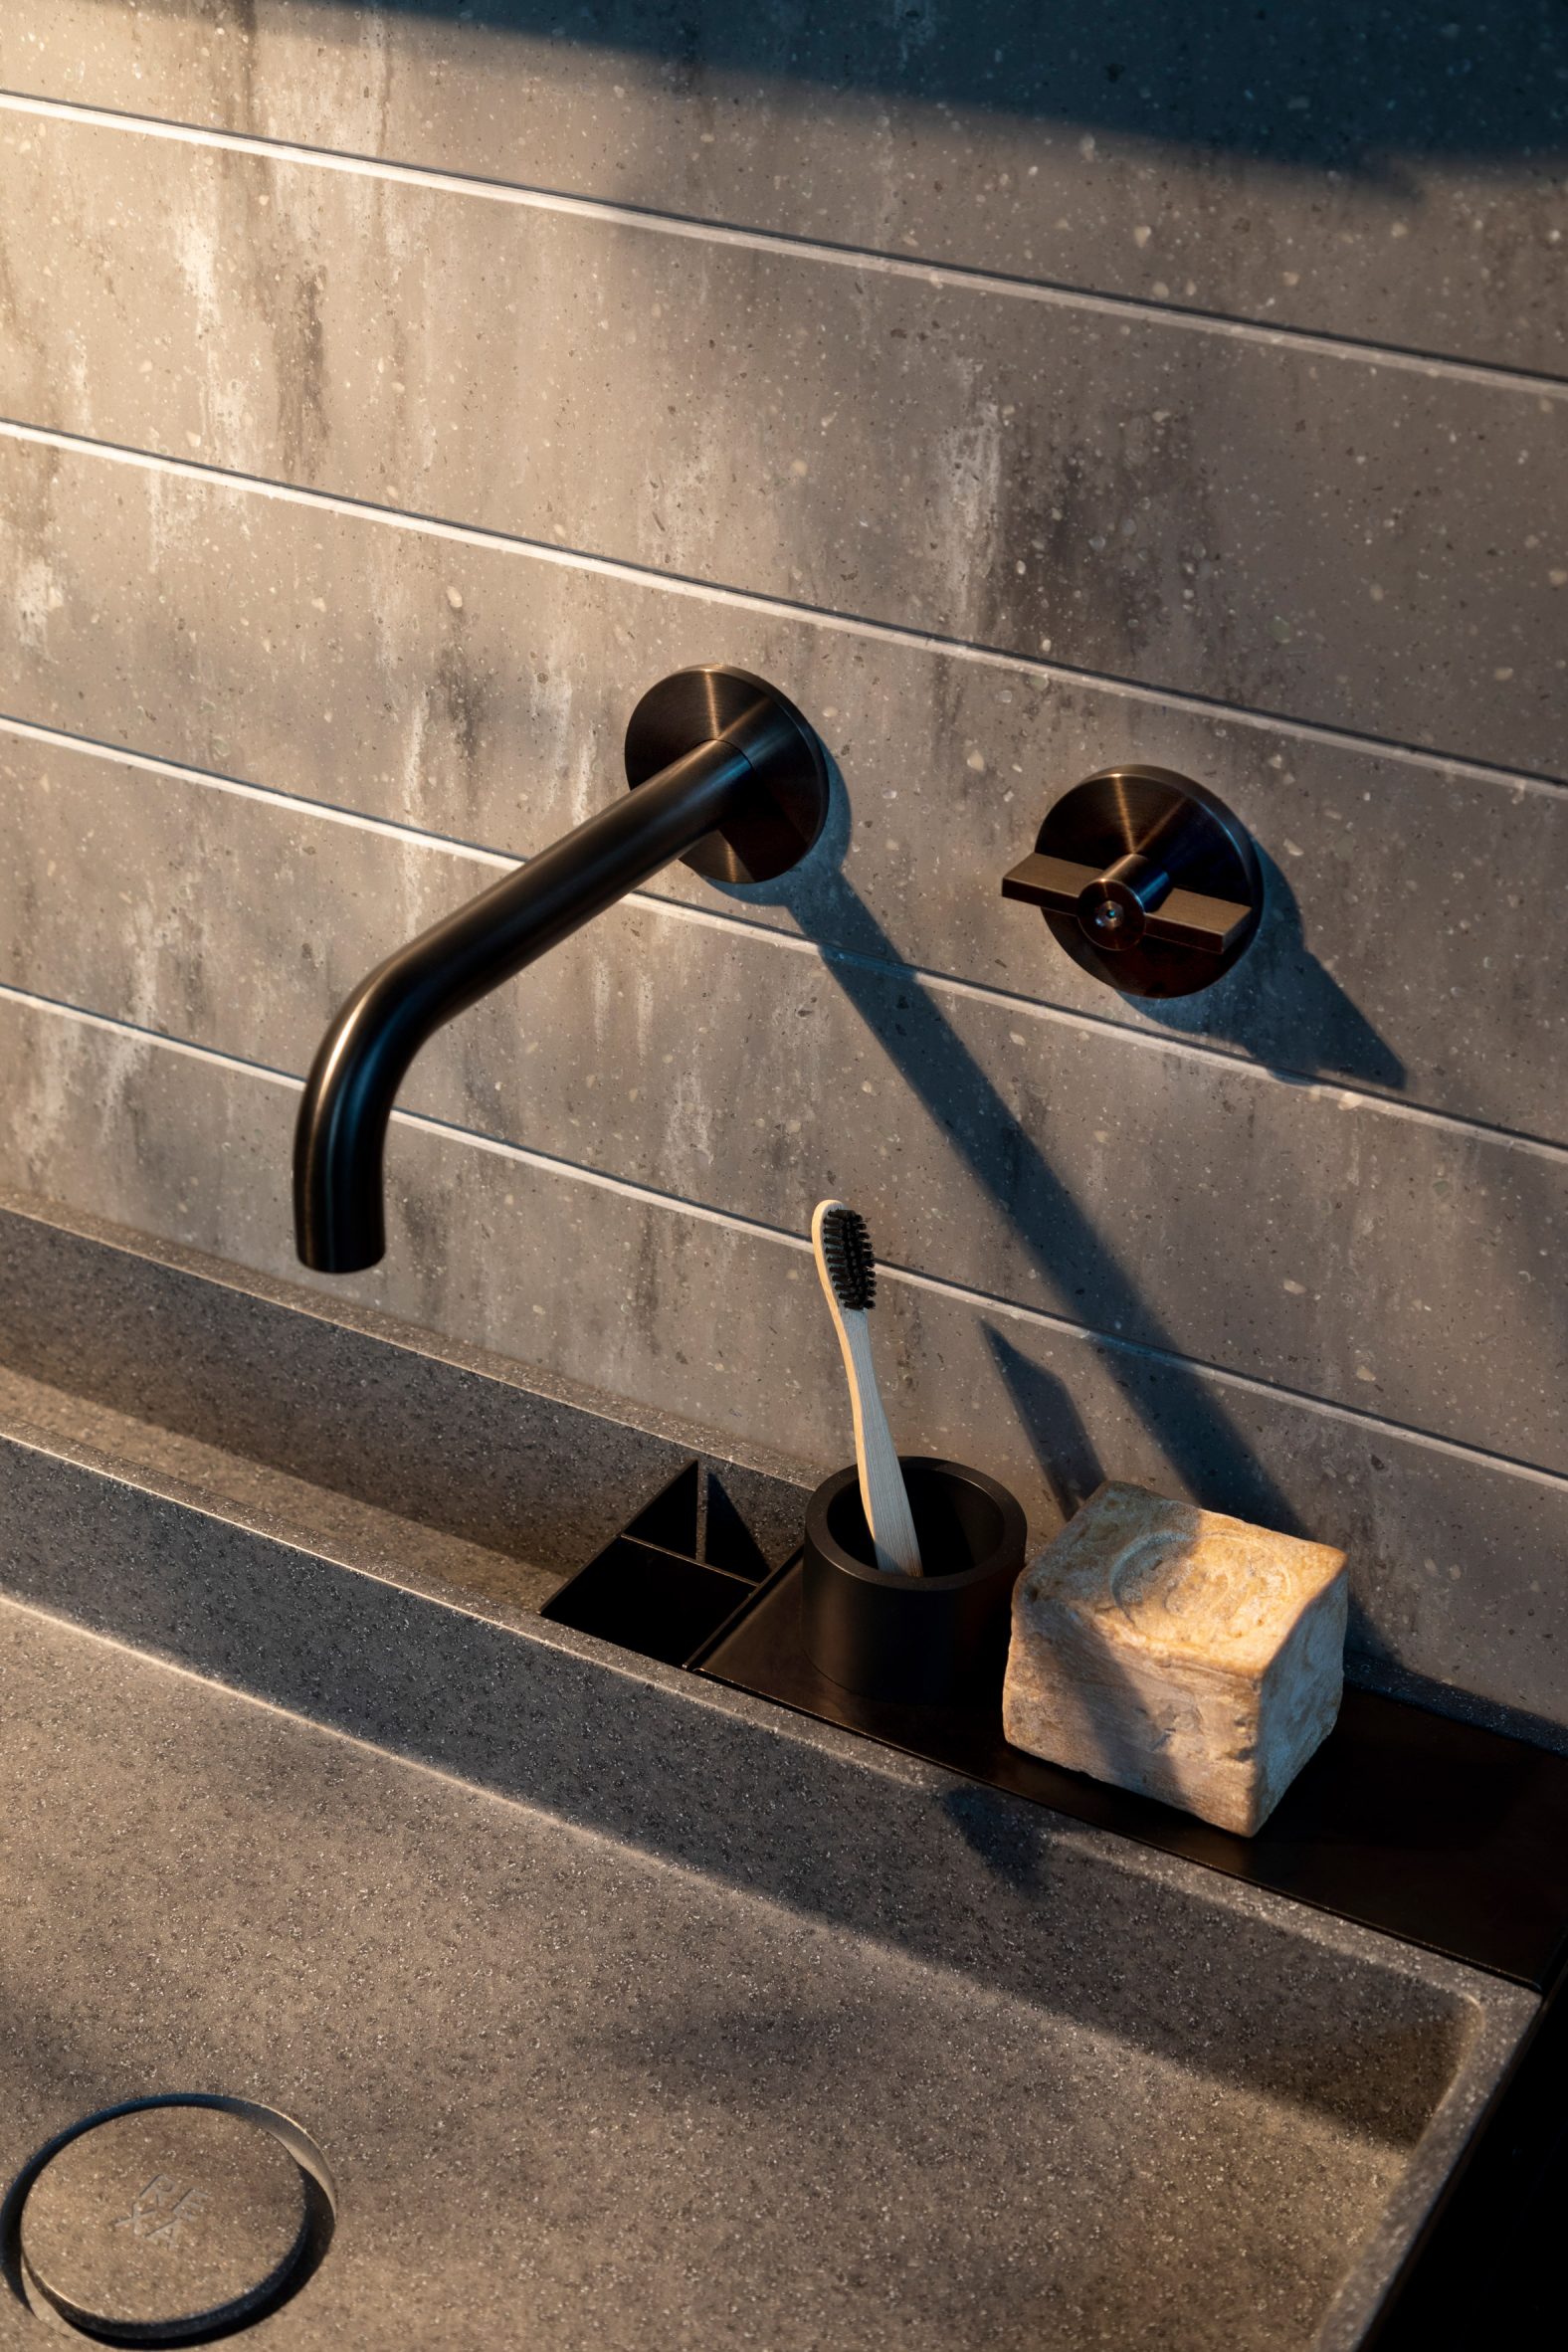 The Valvola01 range includes bathroom and kitchen taps